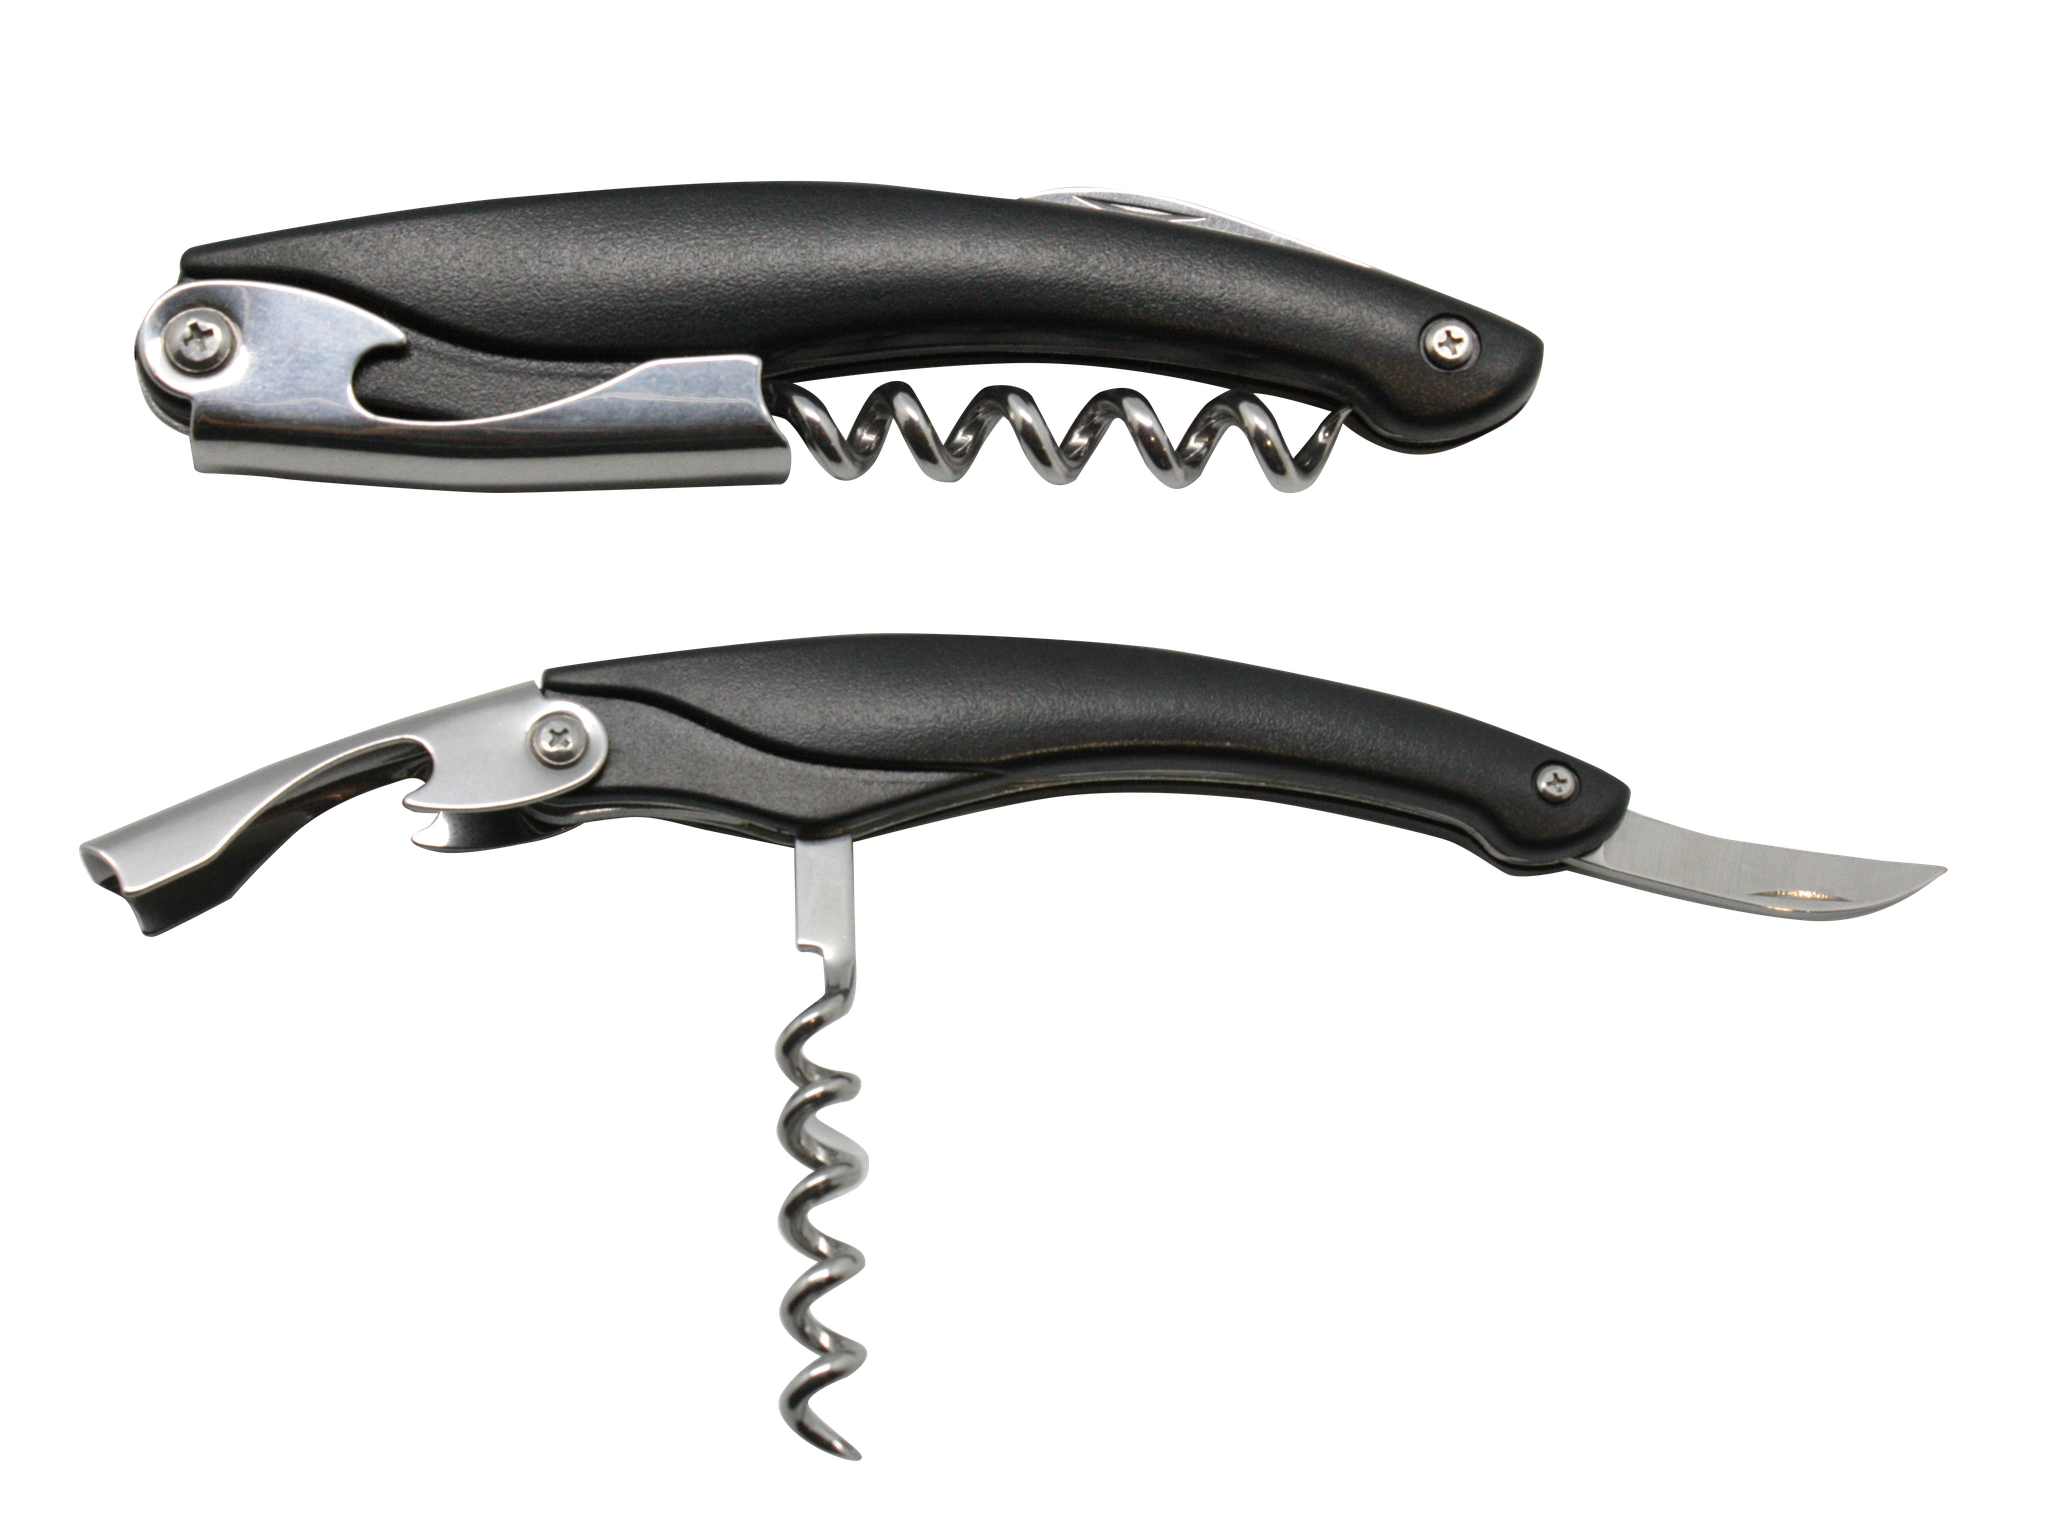 VPS-20008 - Metal Wine Opener with Corkscrew, Knife, & Black Handle